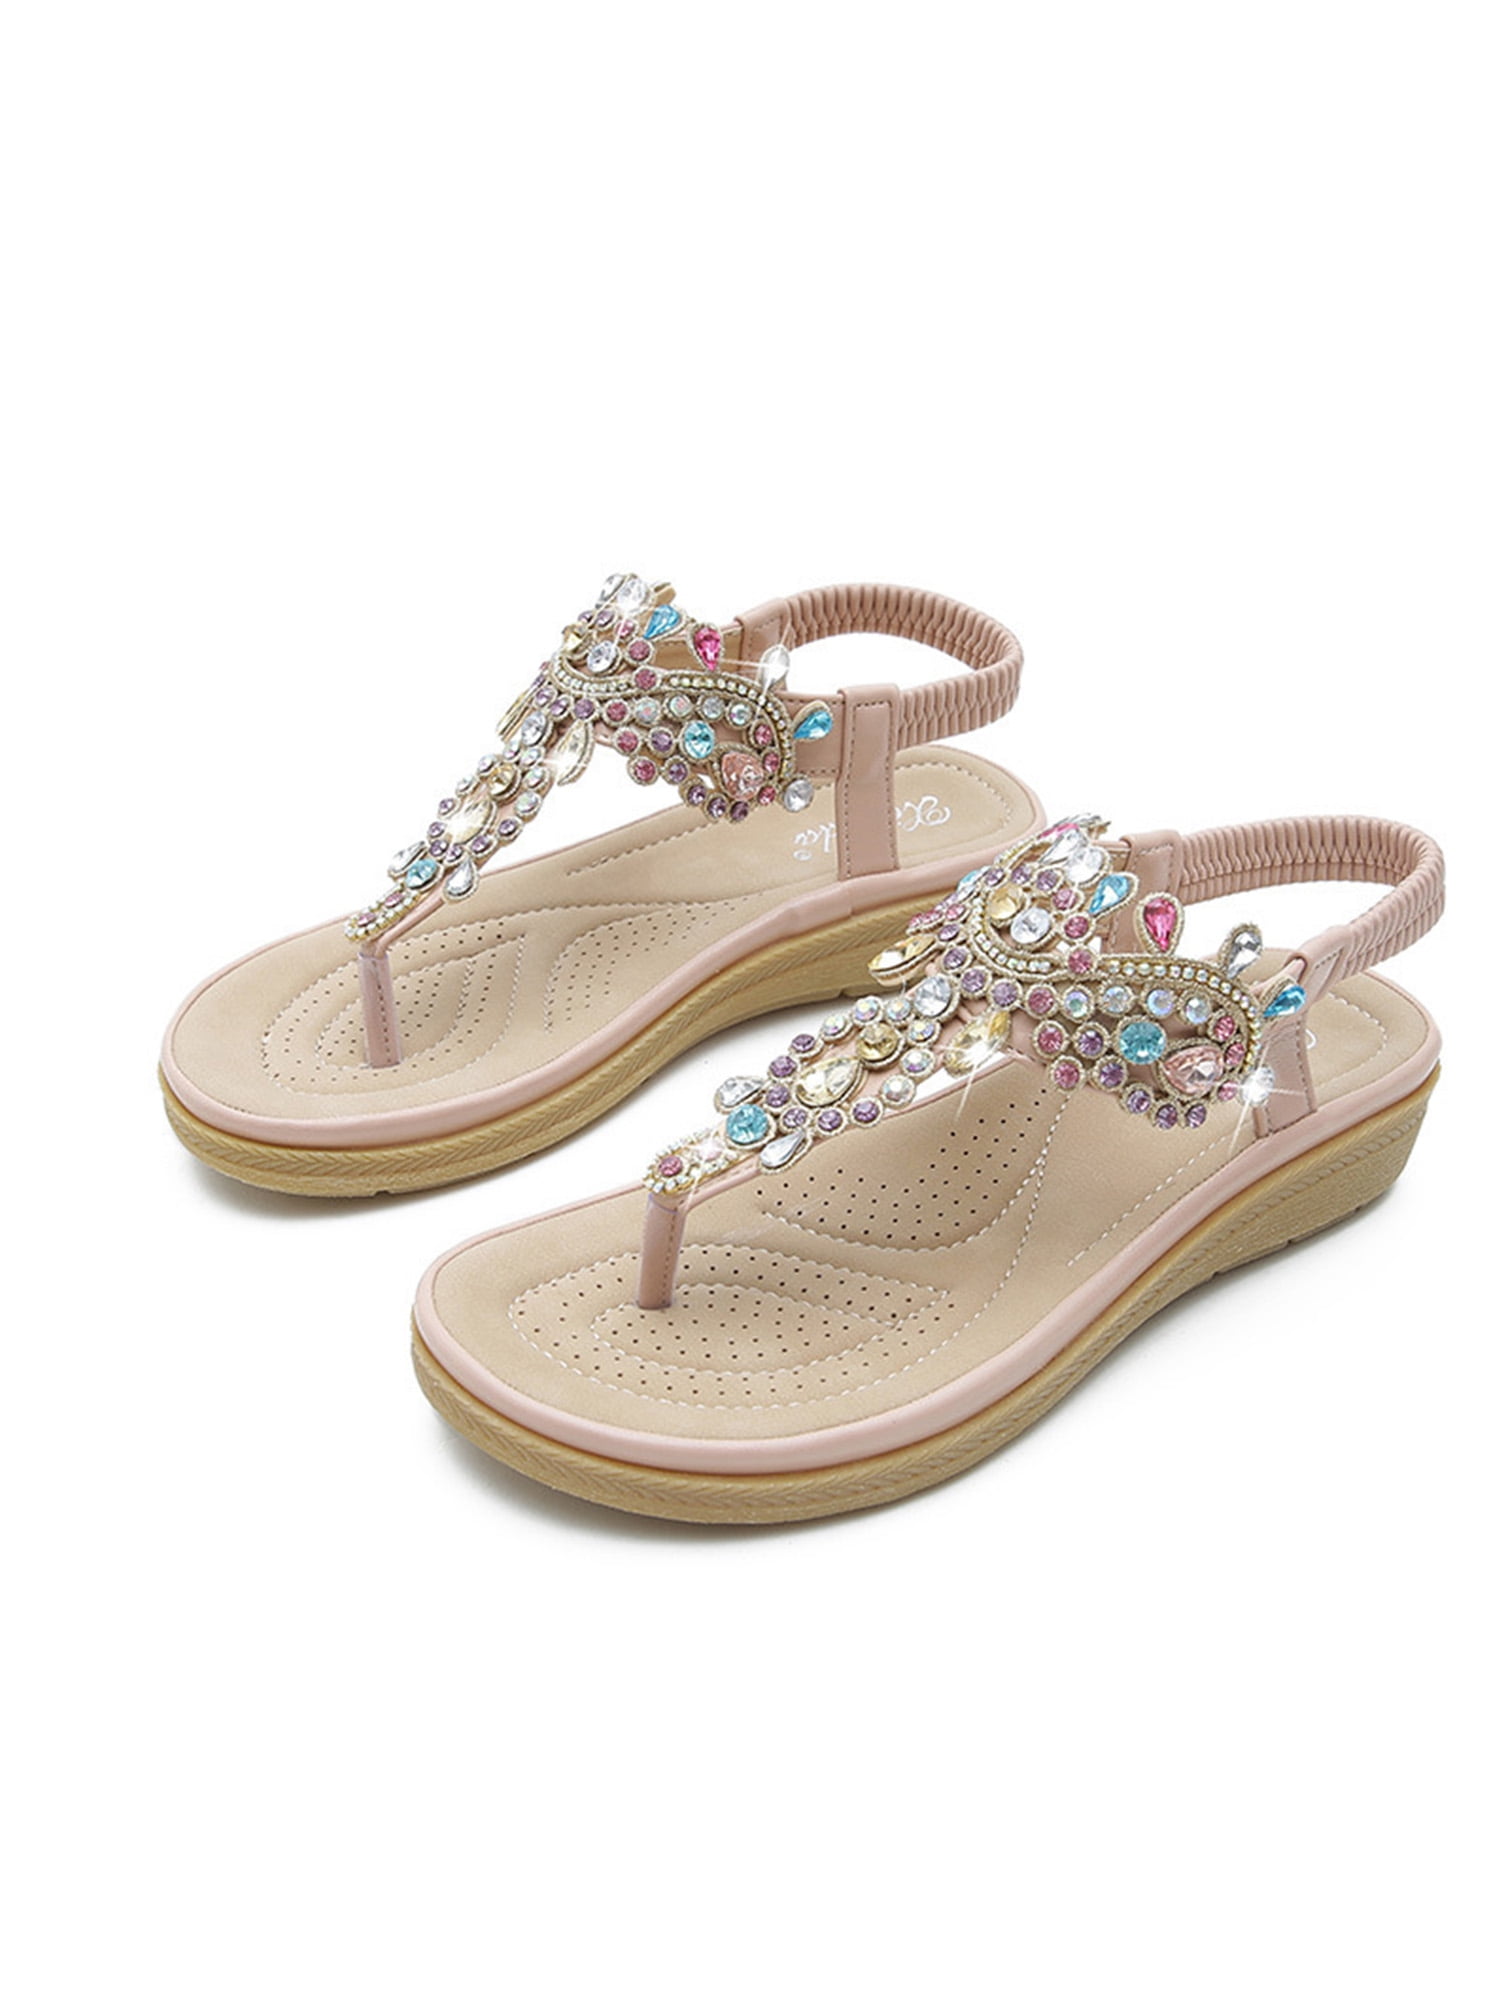 Womens Sandals Rhinestone Flowers Flip Flop Flat Slippers Casual Summer Beach Sandals Comfortable Ladies Shoes Dressy 